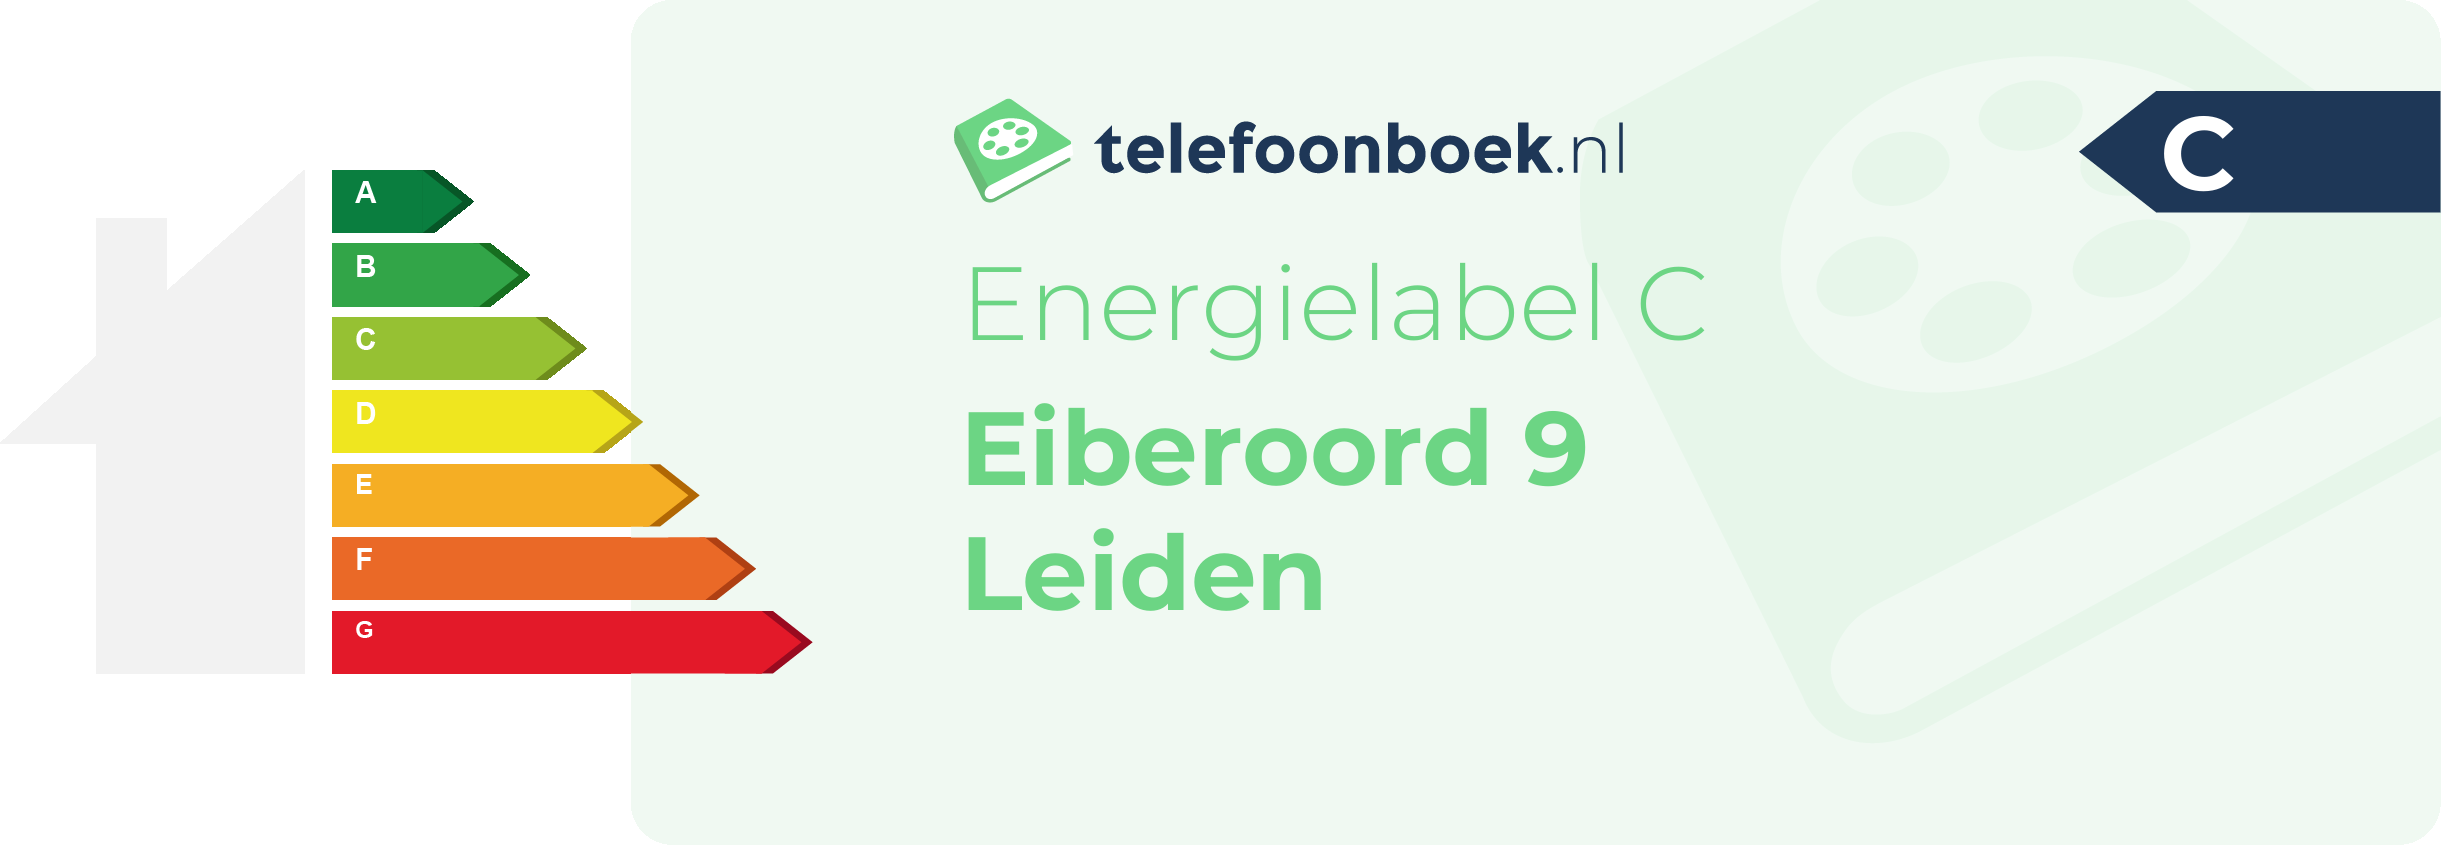 Energielabel Eiberoord 9 Leiden